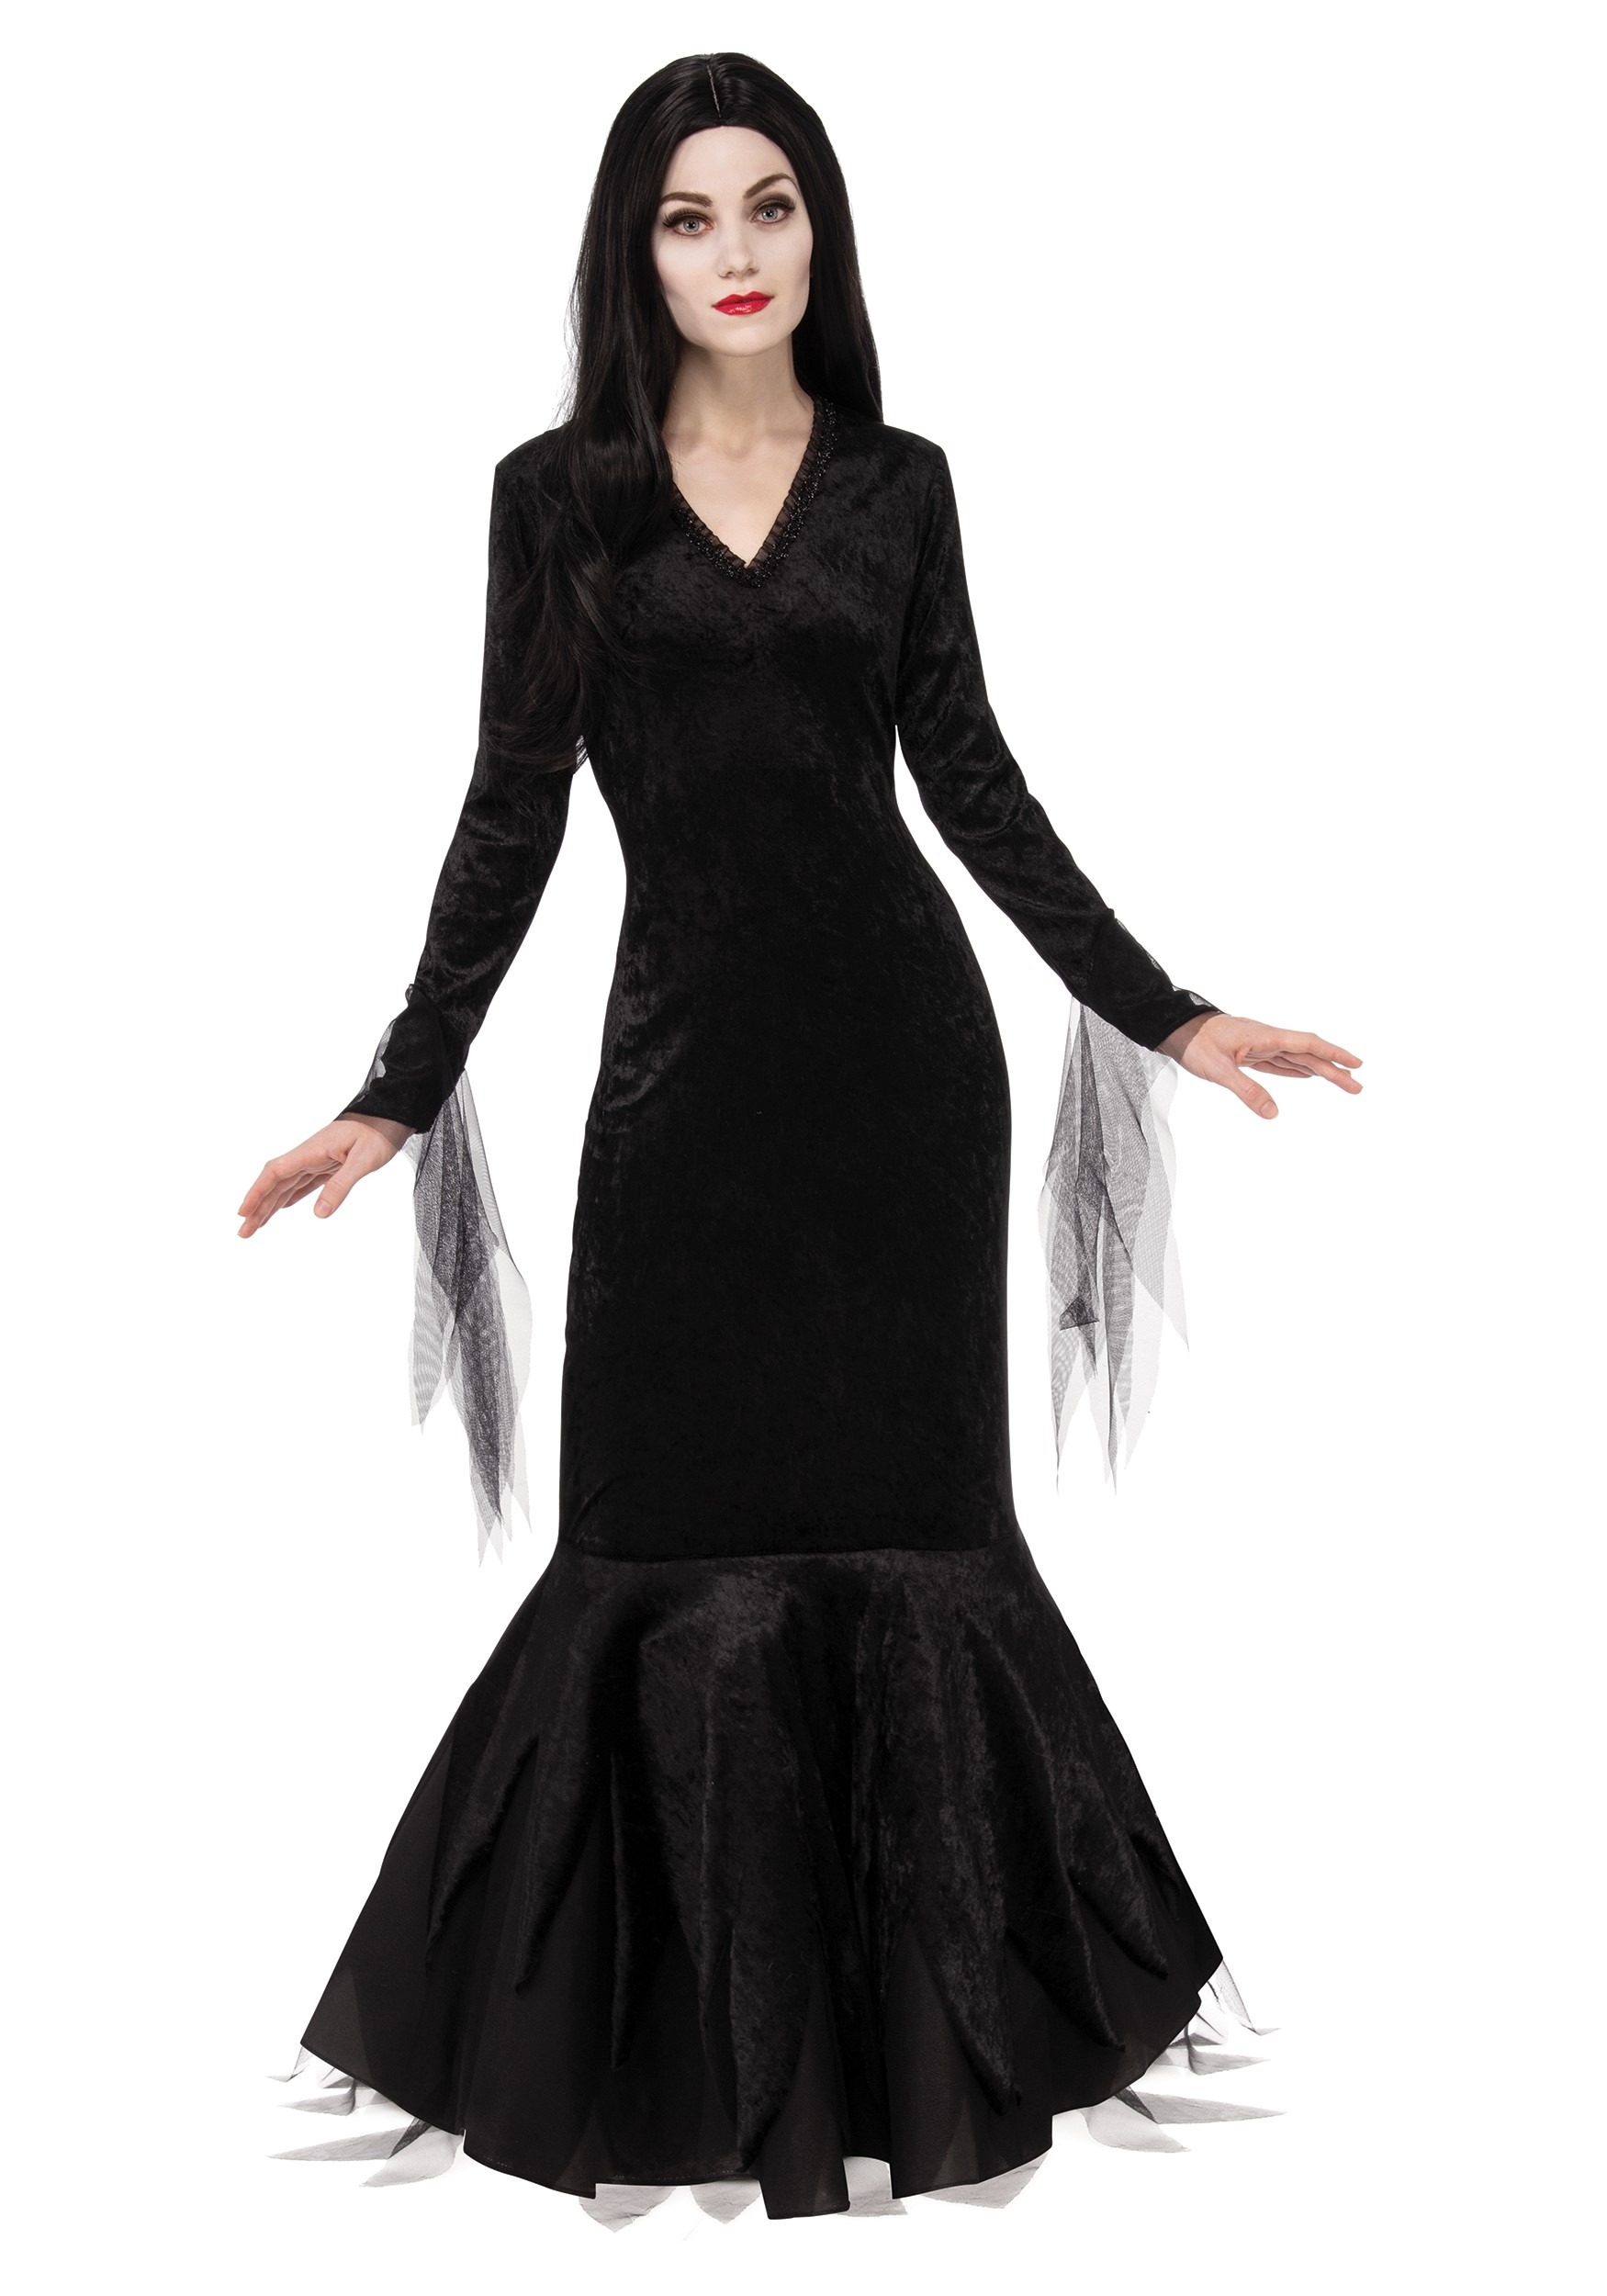 Addams family morticia cosplay